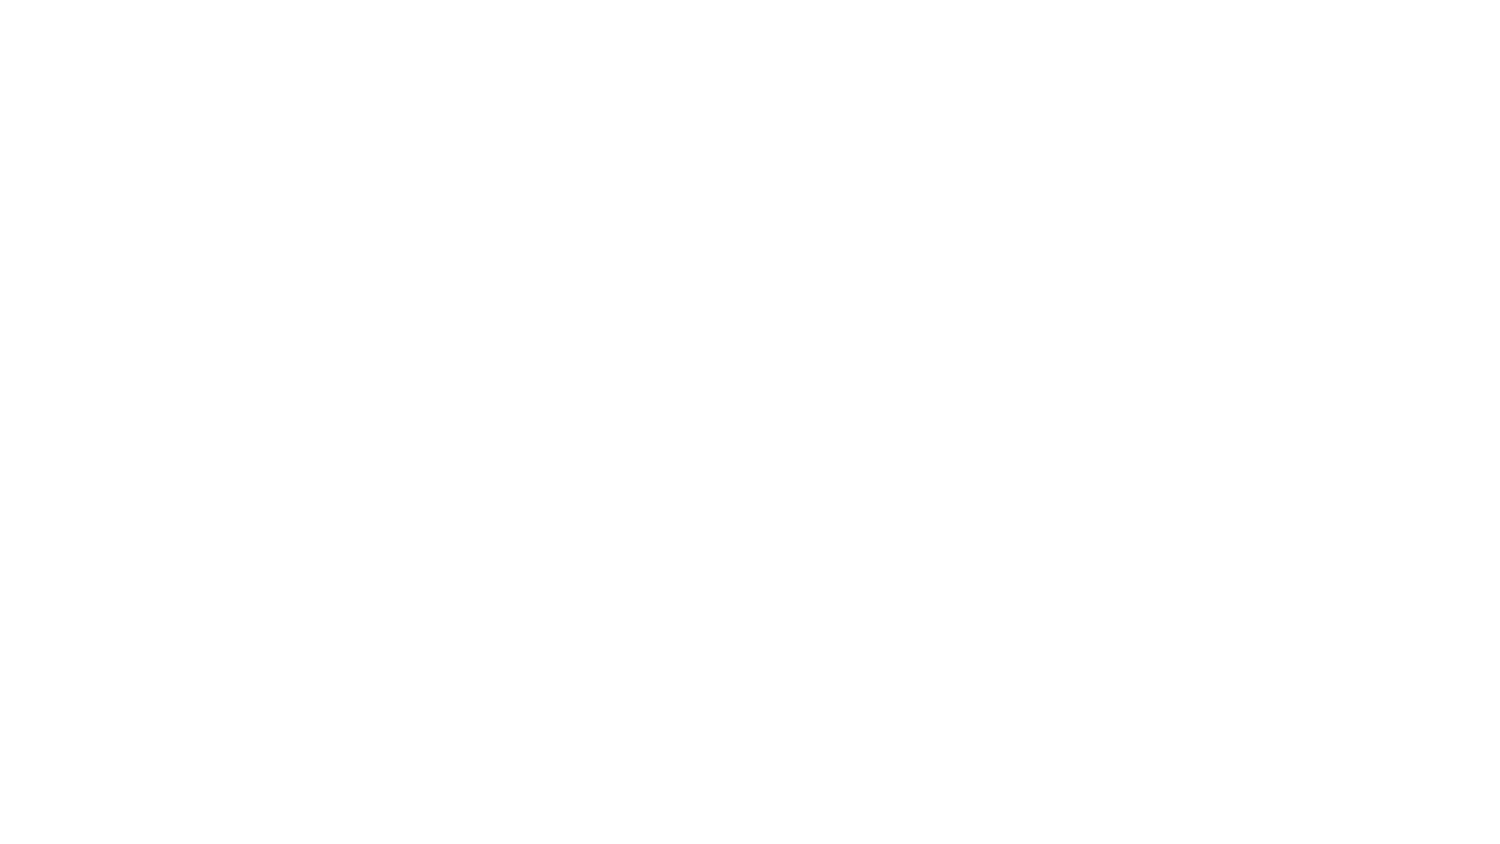 tonic mag